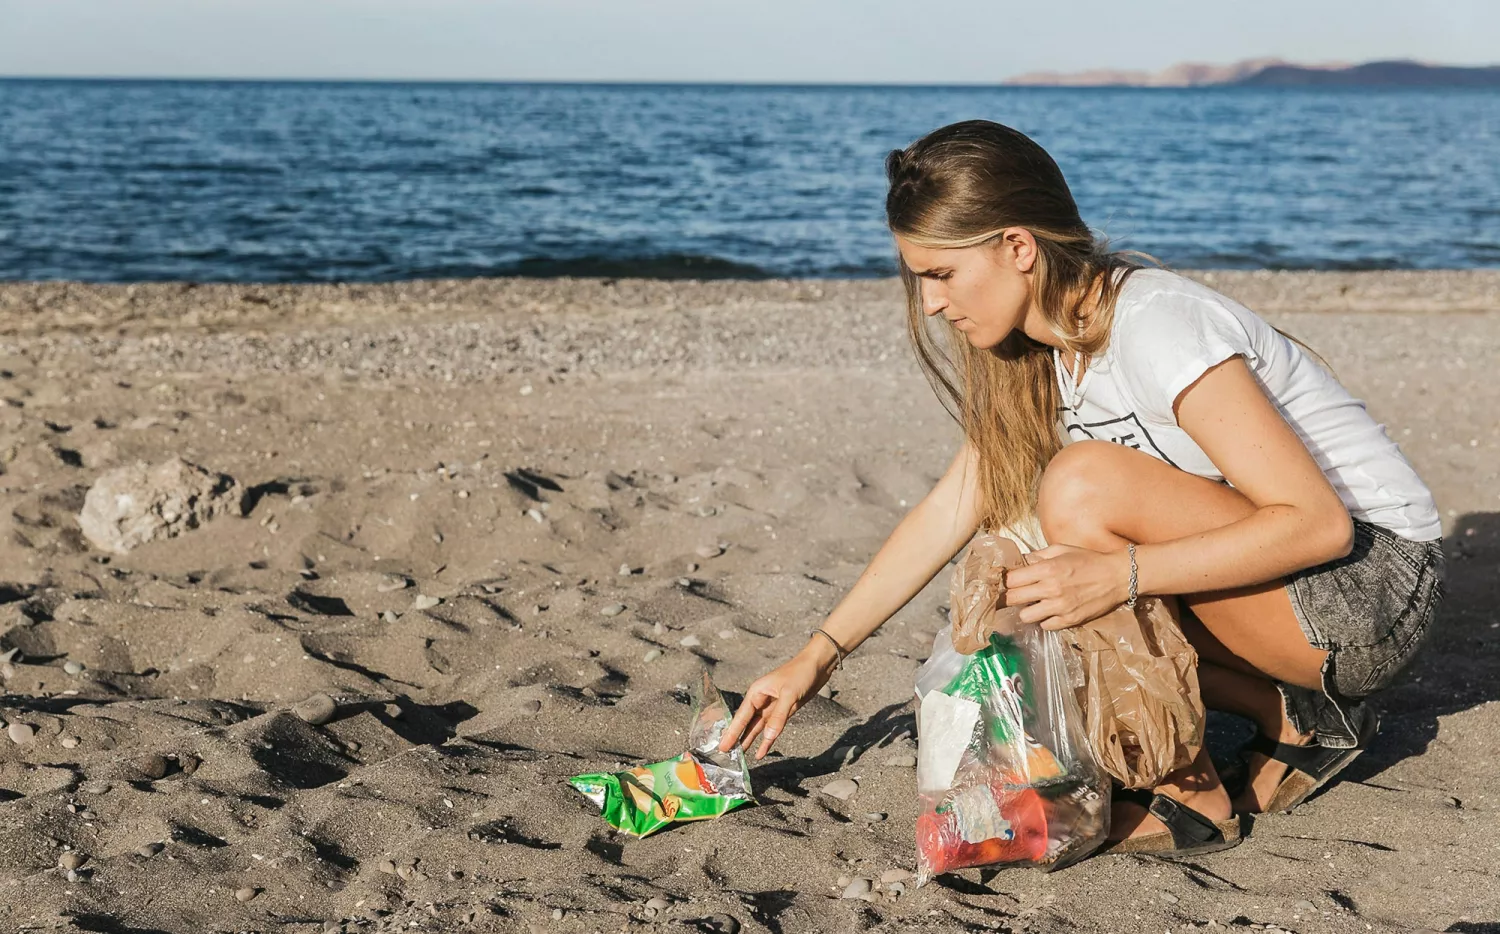 Beach cleaners: por qué limpiar playas está de moda